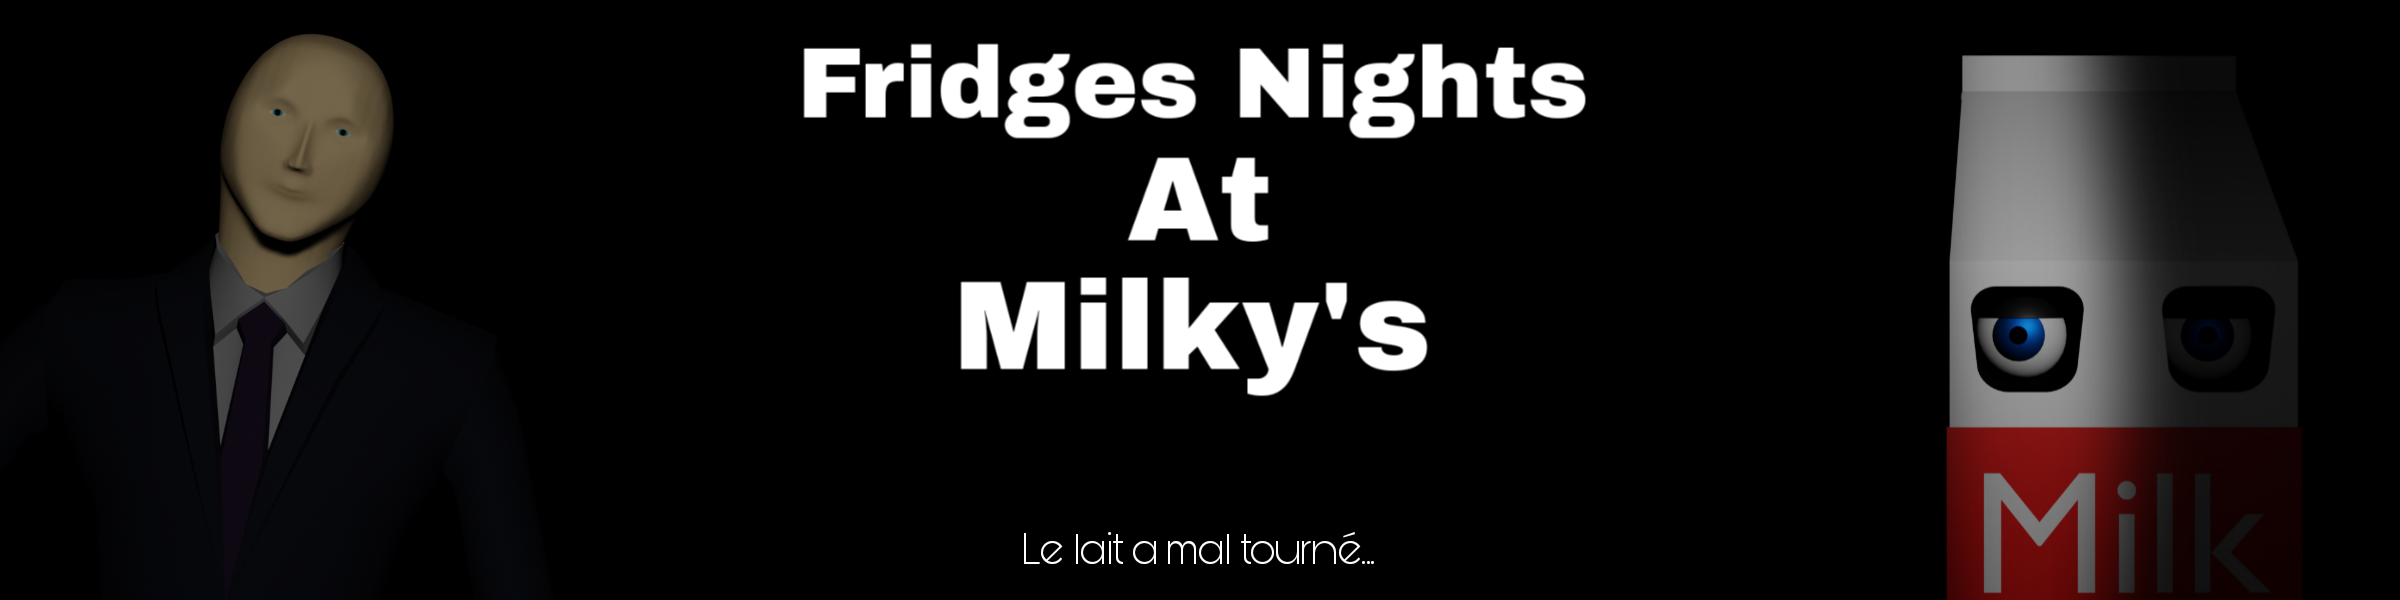 Fridges Nights At Milky's 1